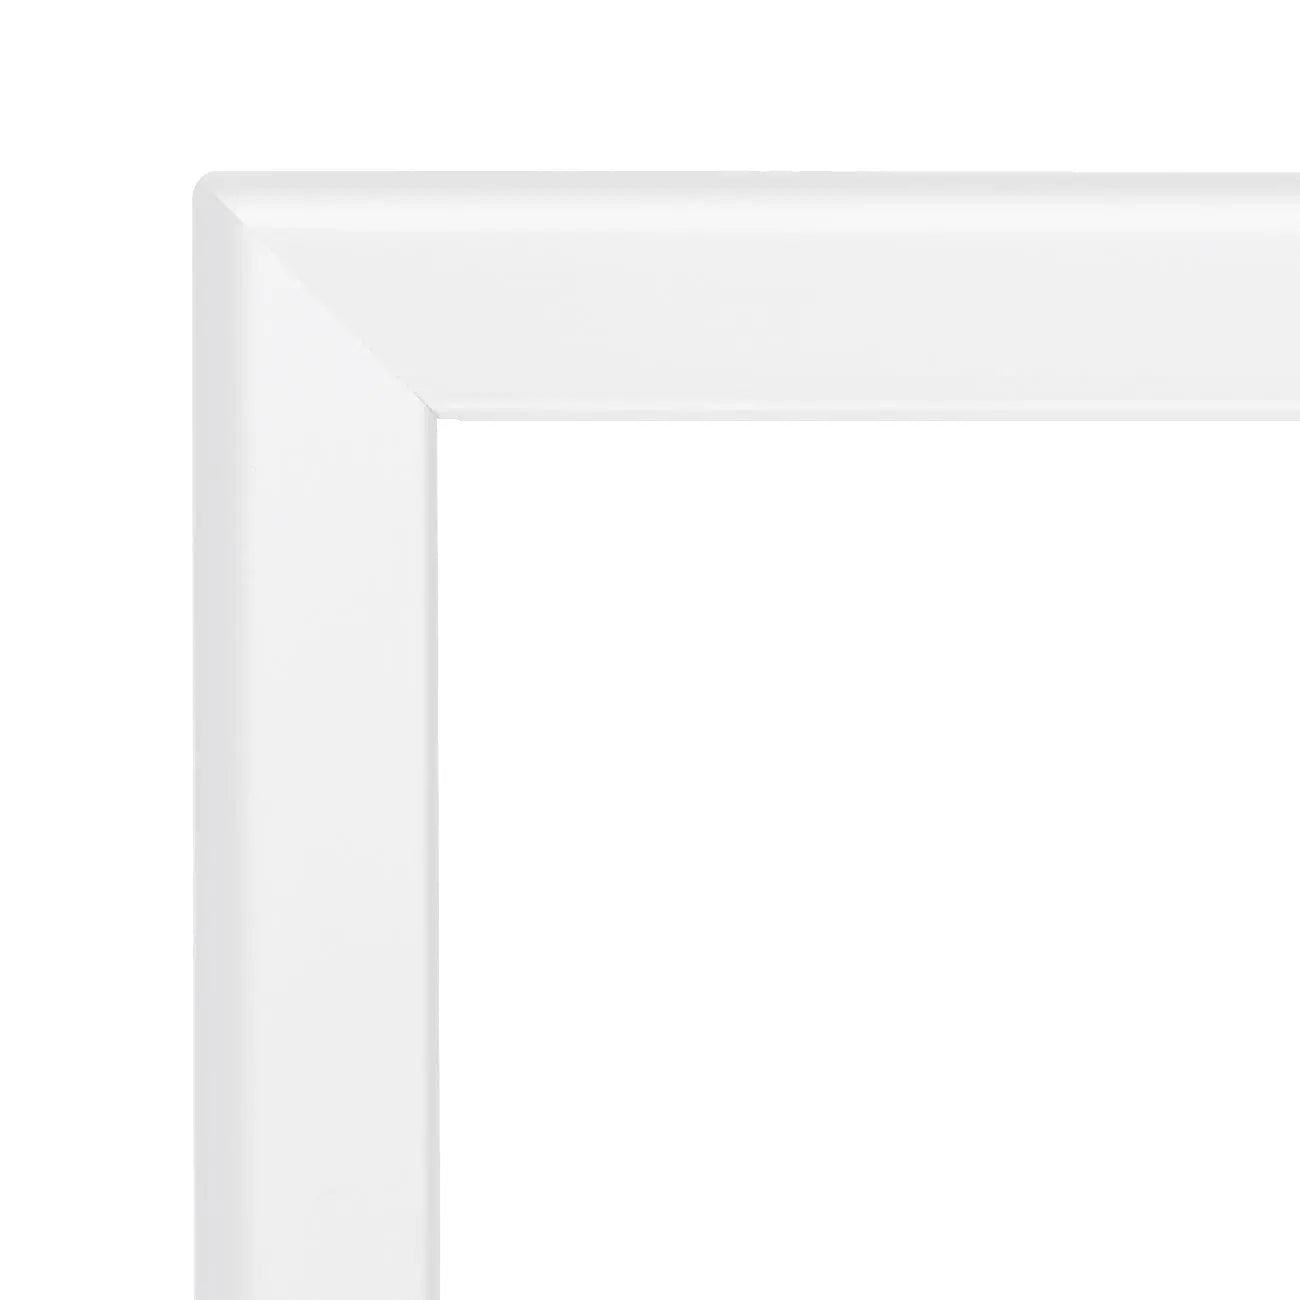 16x20 White SnapeZo® Snap Frame - 1.25" Profile - Snap Frames Direct